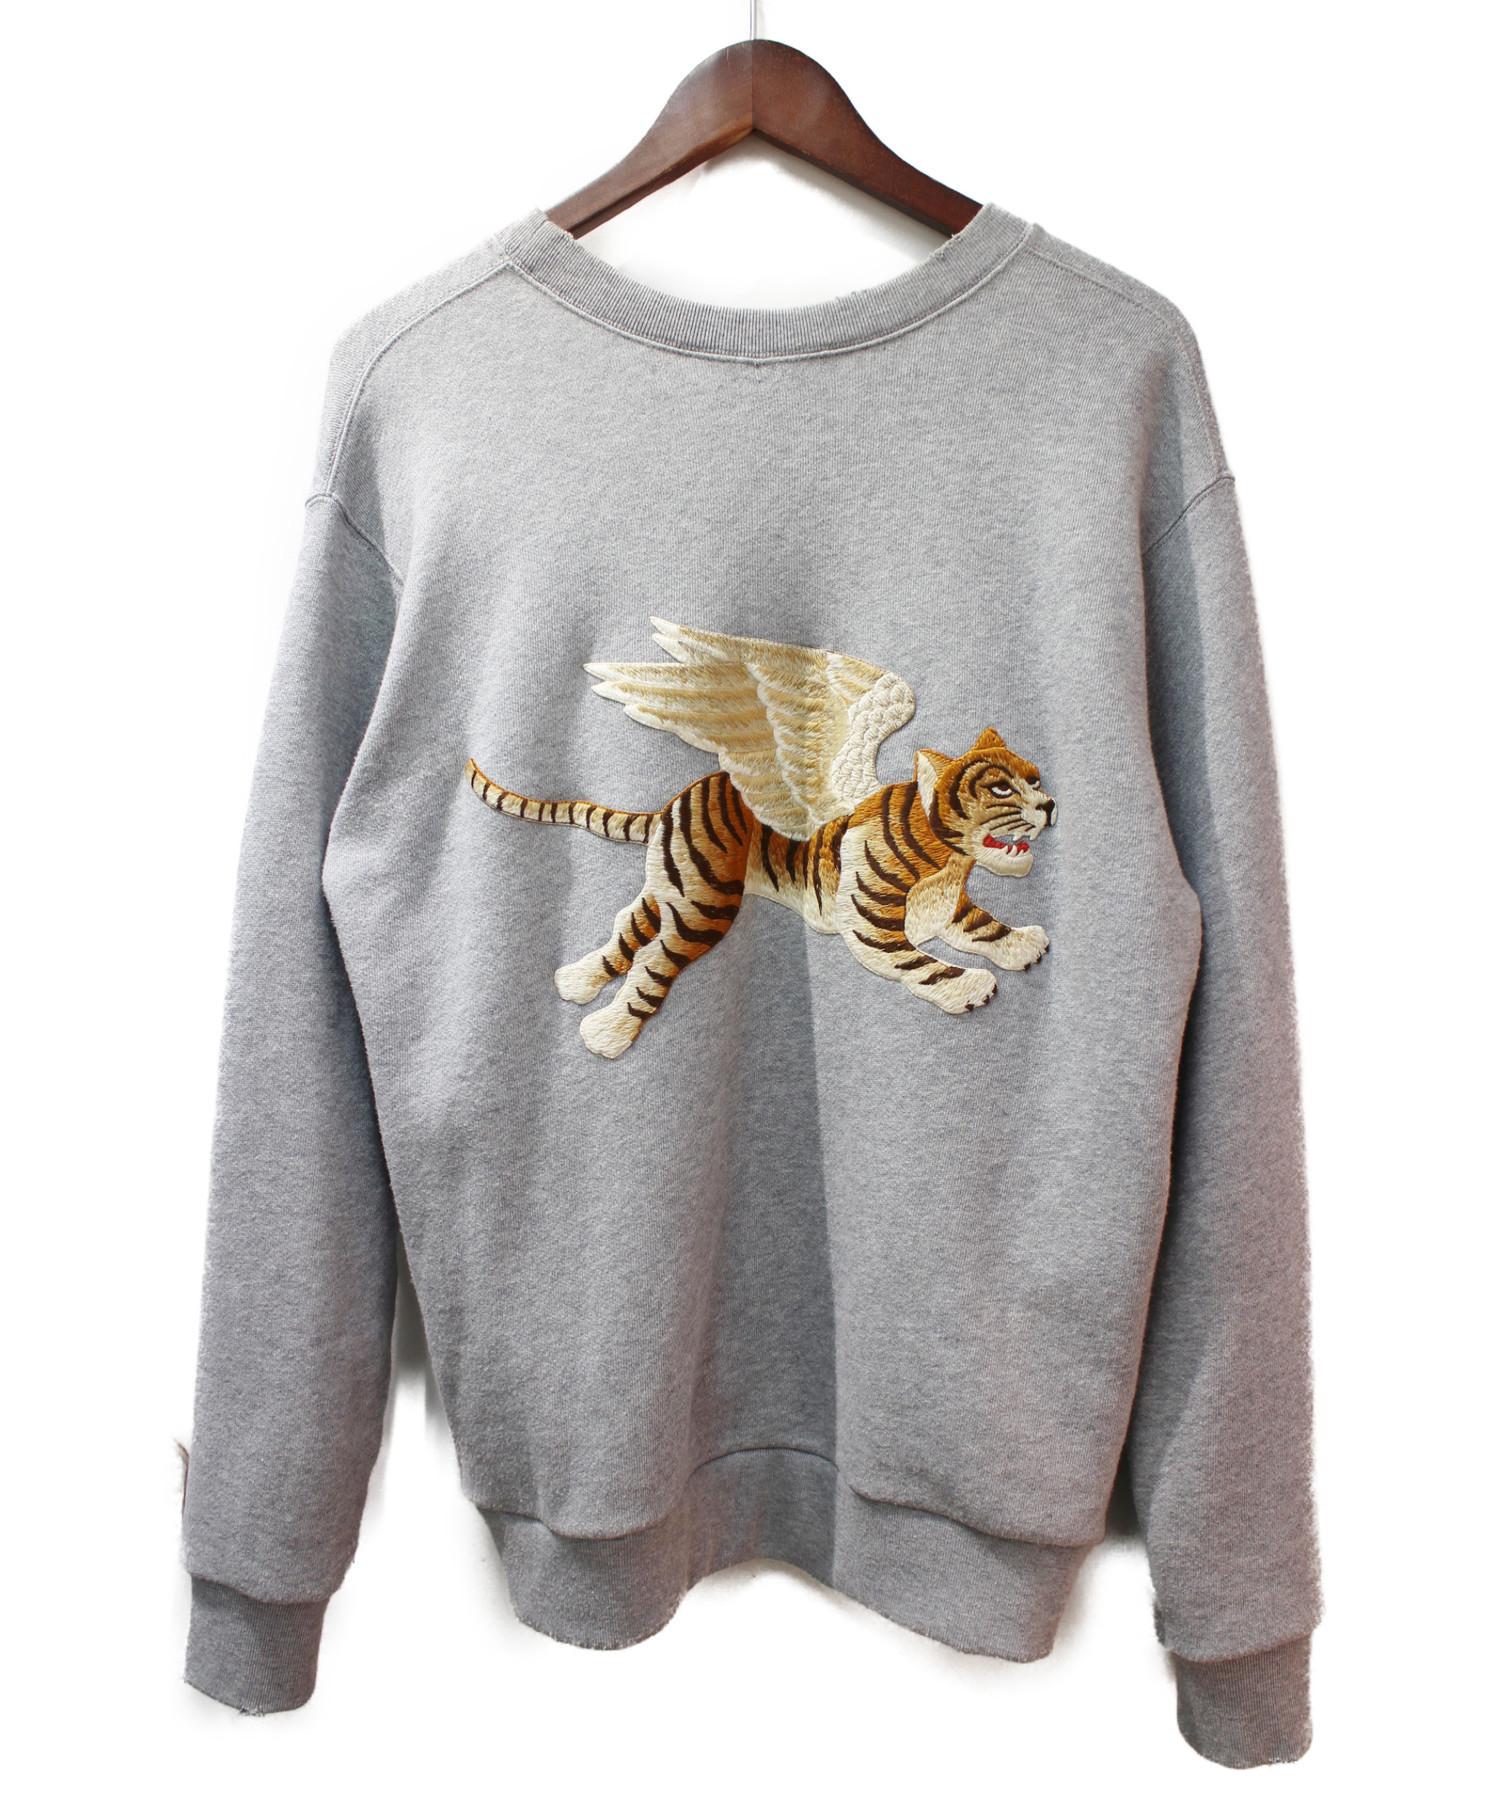 GUCCI (グッチ) ヴィンテージロゴ タイガー刺繍スウェットシャツ ライトグレー サイズ:XS